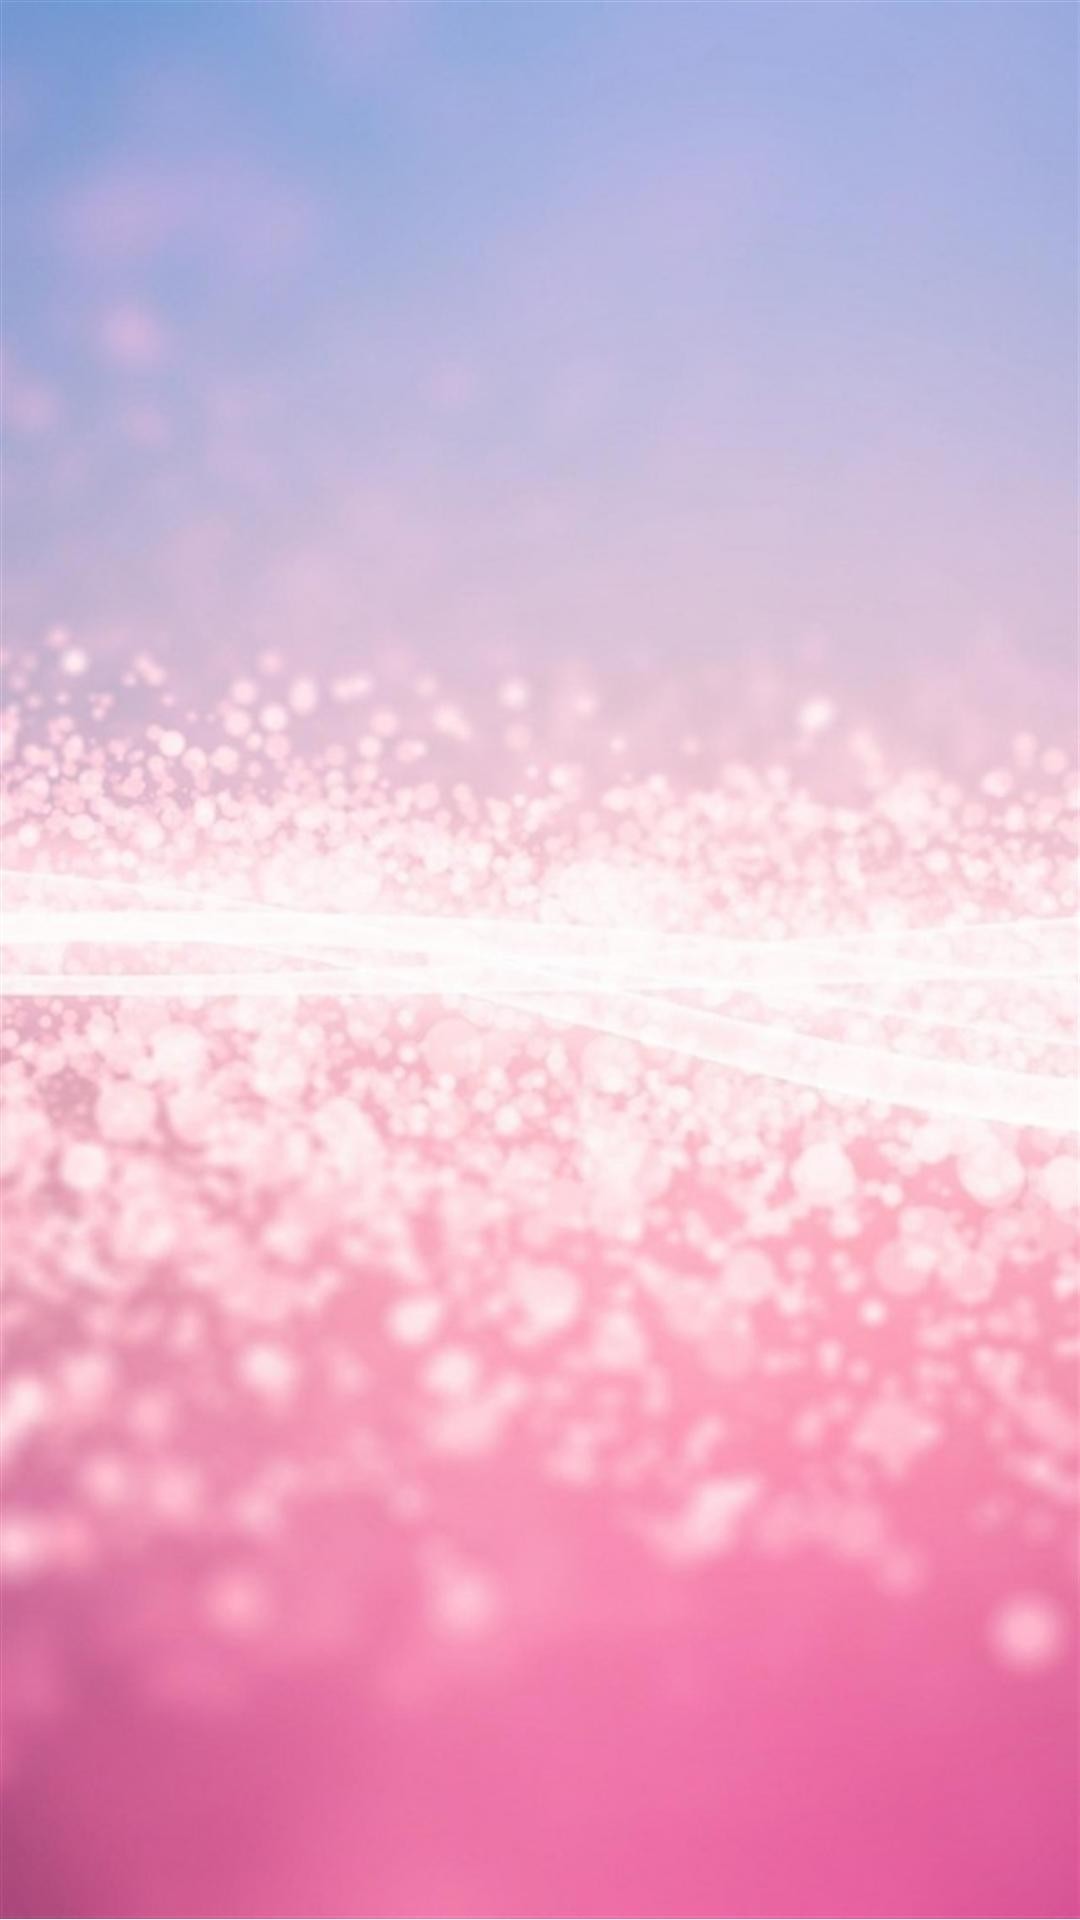 Pink Glitter Stardust Smartphone Wallpaper HD â GetPhotos